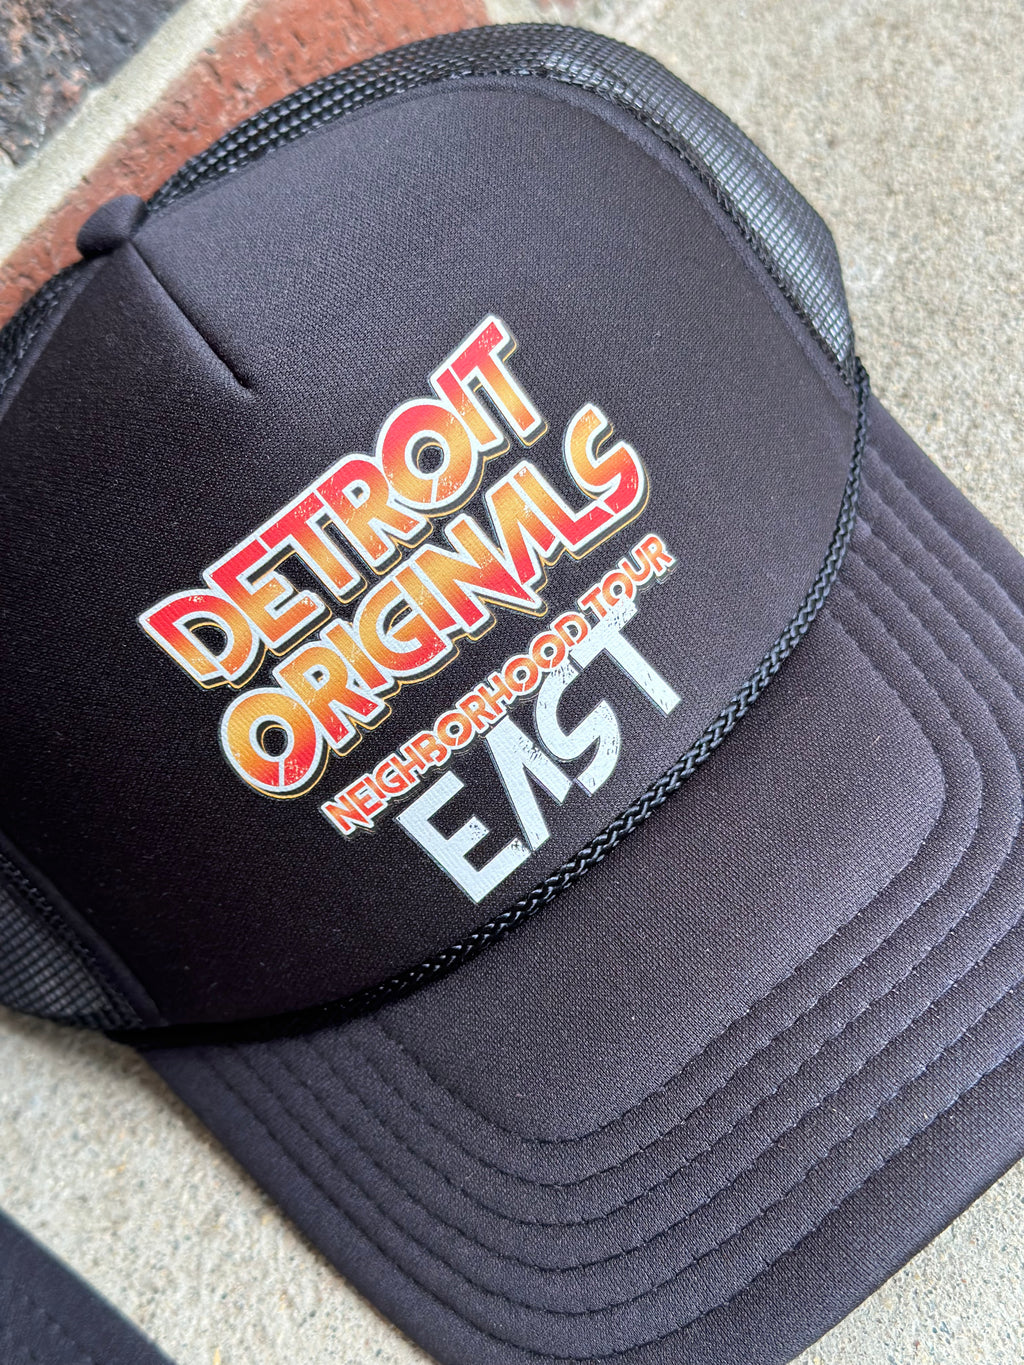 Detroit Originals Neighborhood Tour East Trucker Cap